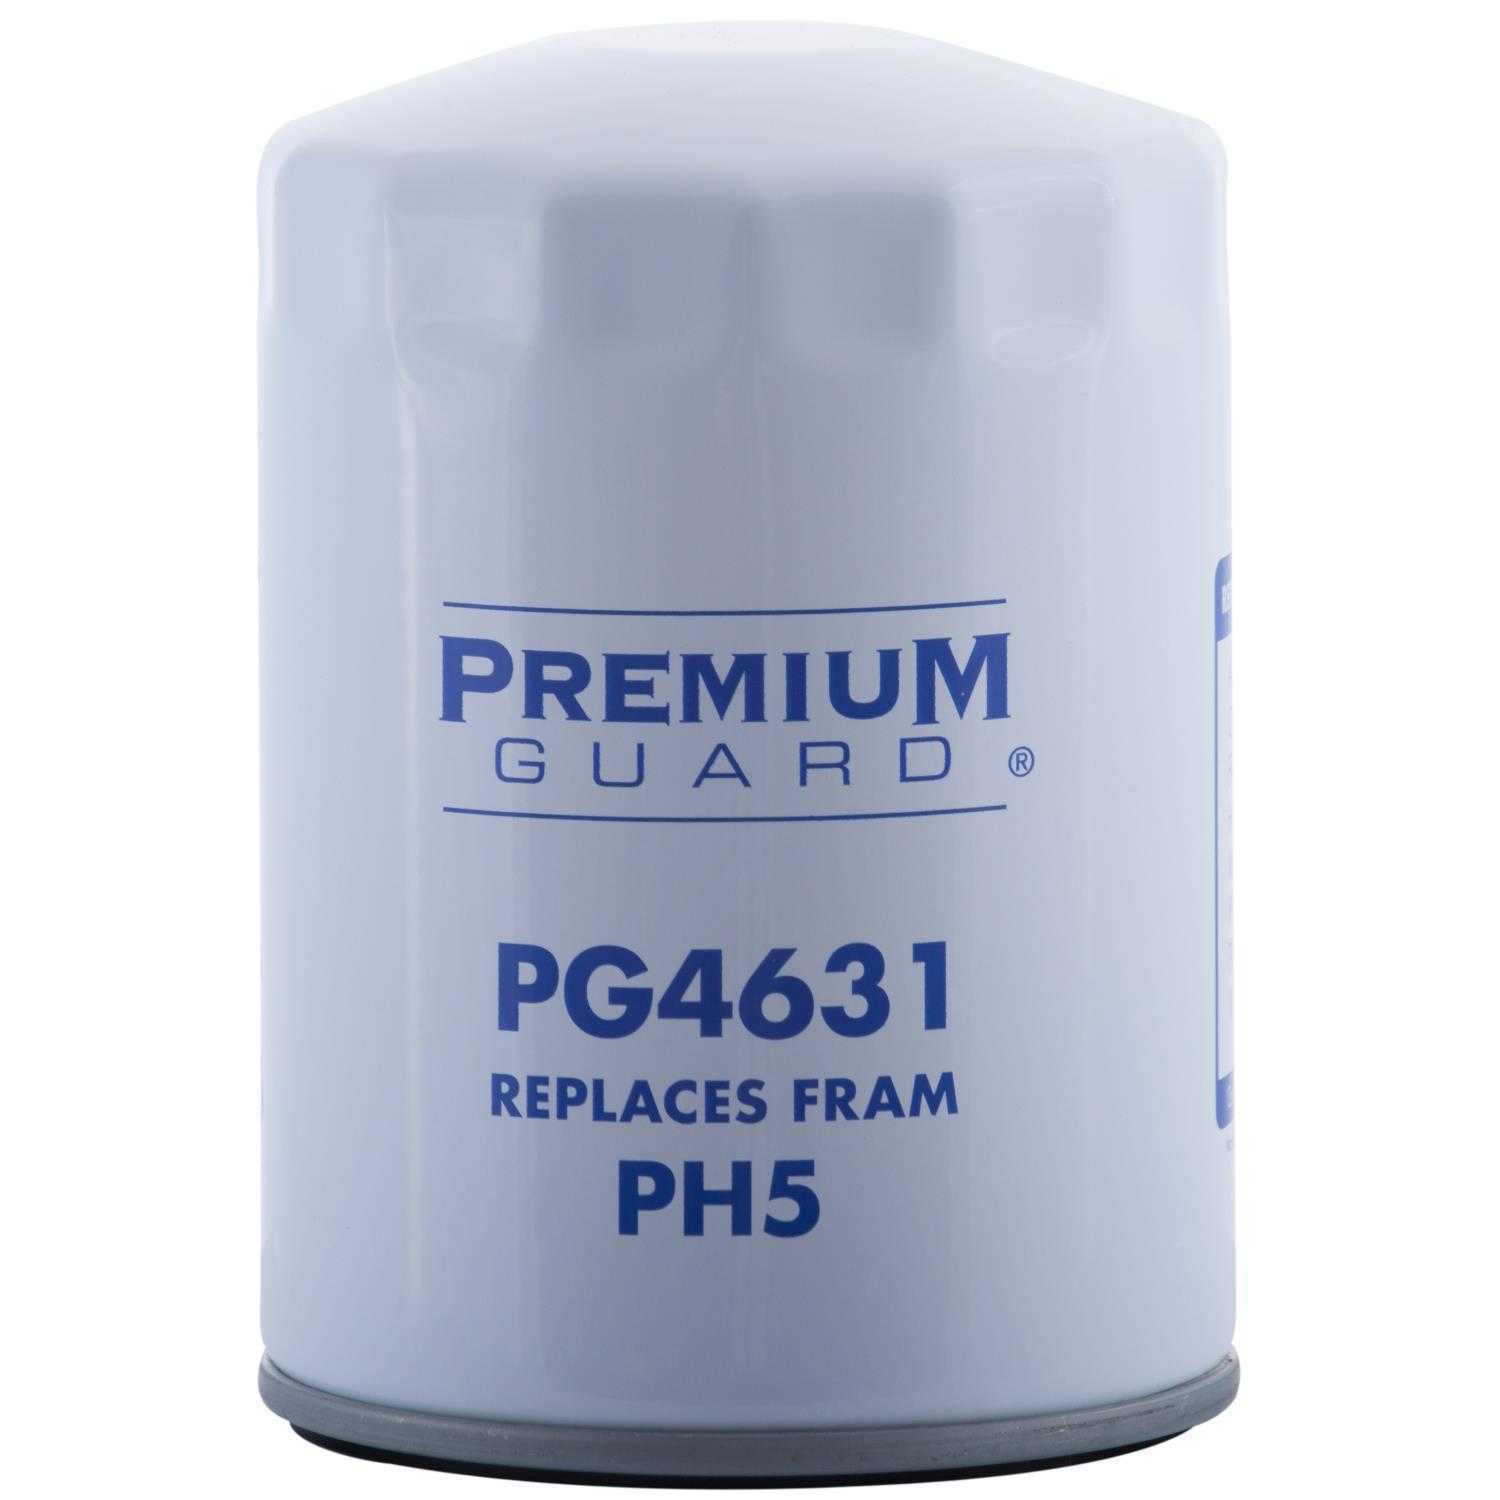 PREMIUM GUARD - Standard Life Oil Filter - PRG PG4631